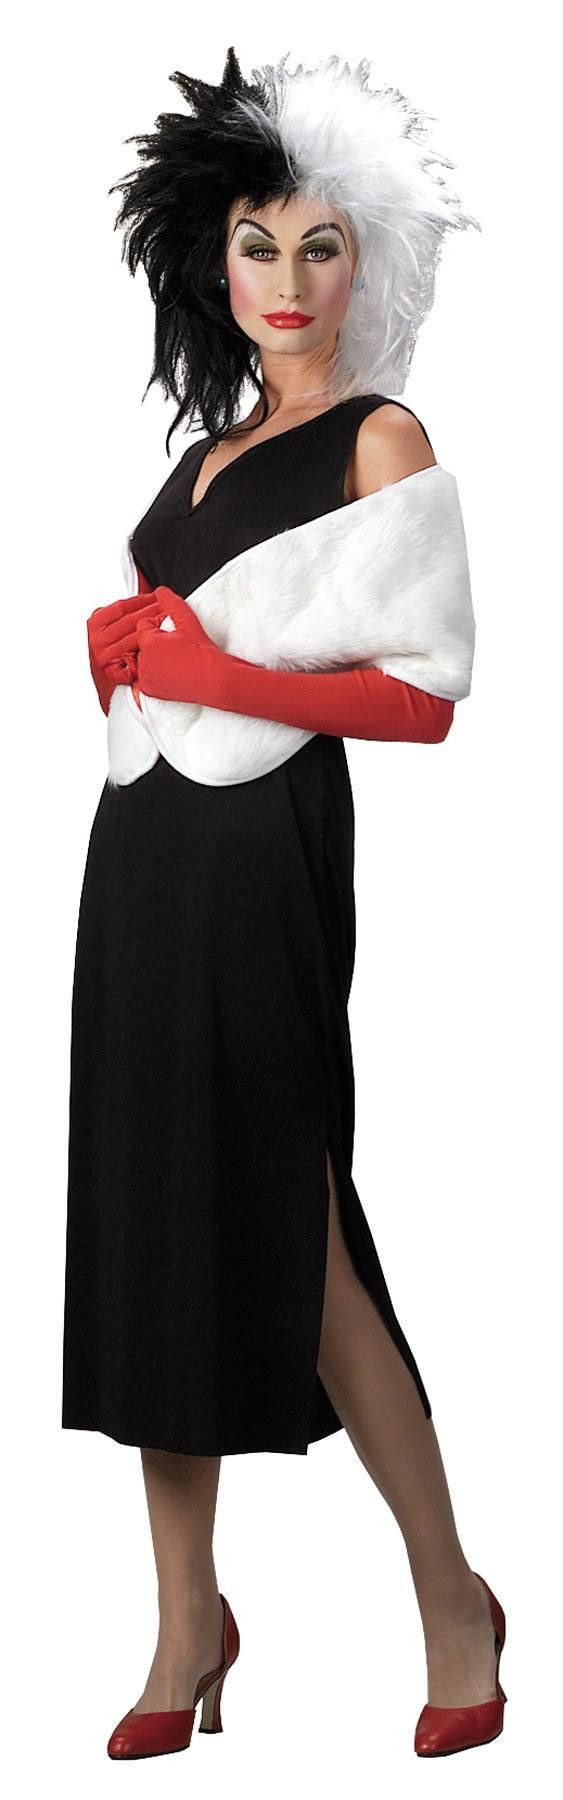 Best ideas about DIY Cruella Deville Costume
. Save or Pin Cruella De Vil Adult Cruella DeVille Now.